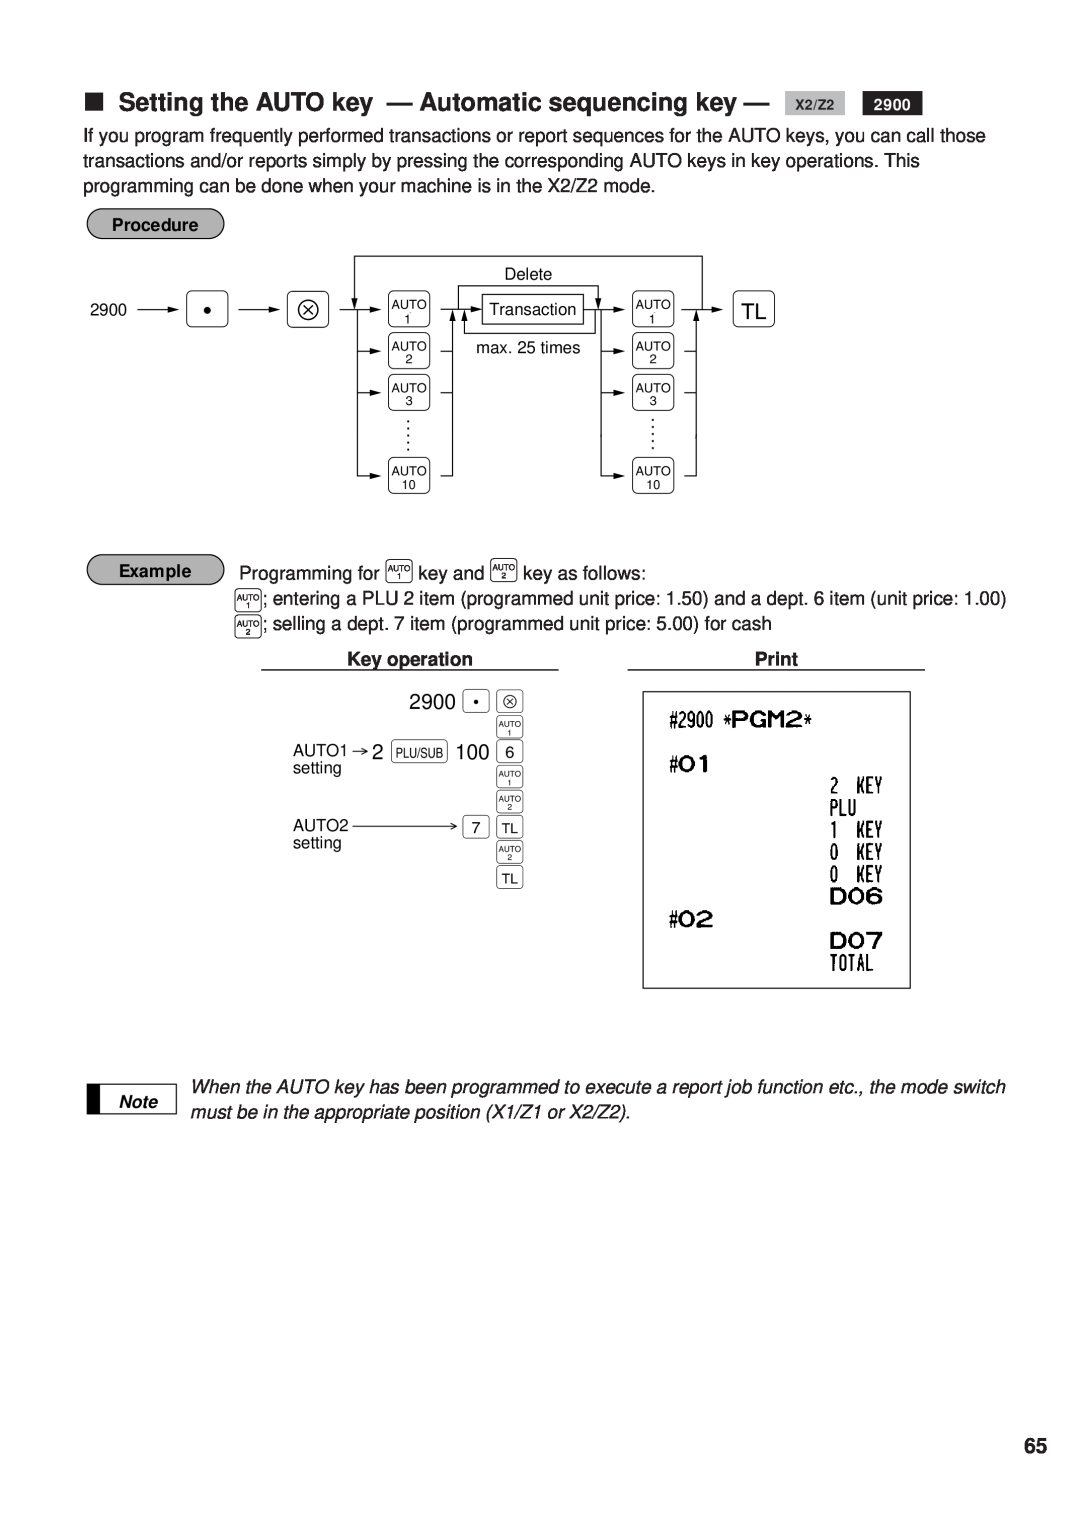 Sharp ER-A450 Setting the AUTO key - Automatic sequencing key - X2/Z2, 2900 . Å, AUTO1 2 § 100, Procedure, Example, Print 